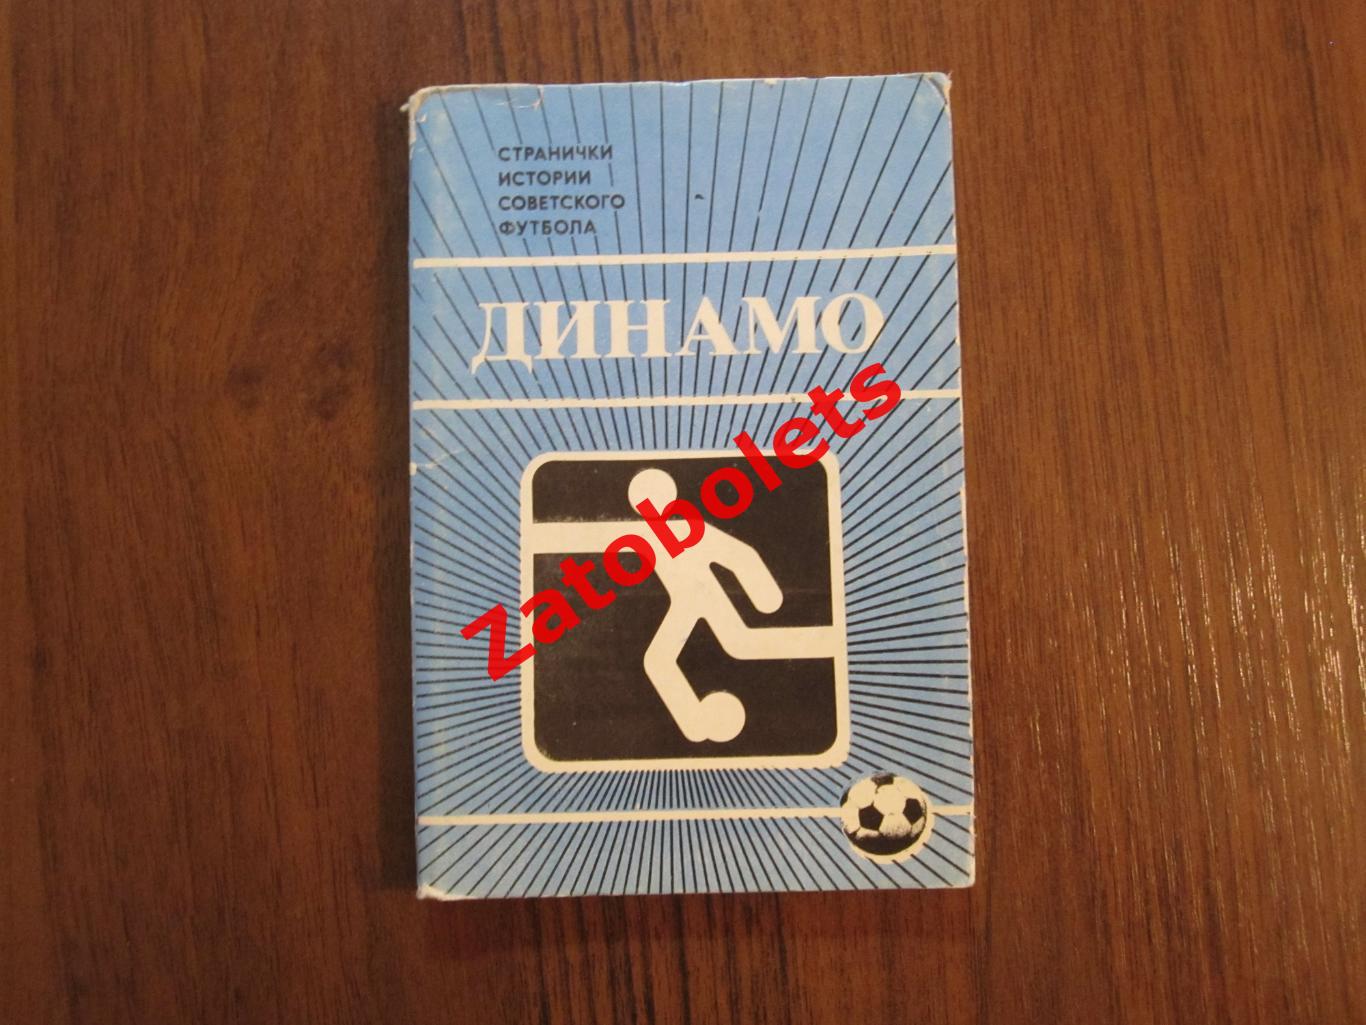 Странички истории Советского футбола. Динамо Москва Набор открыток 1985